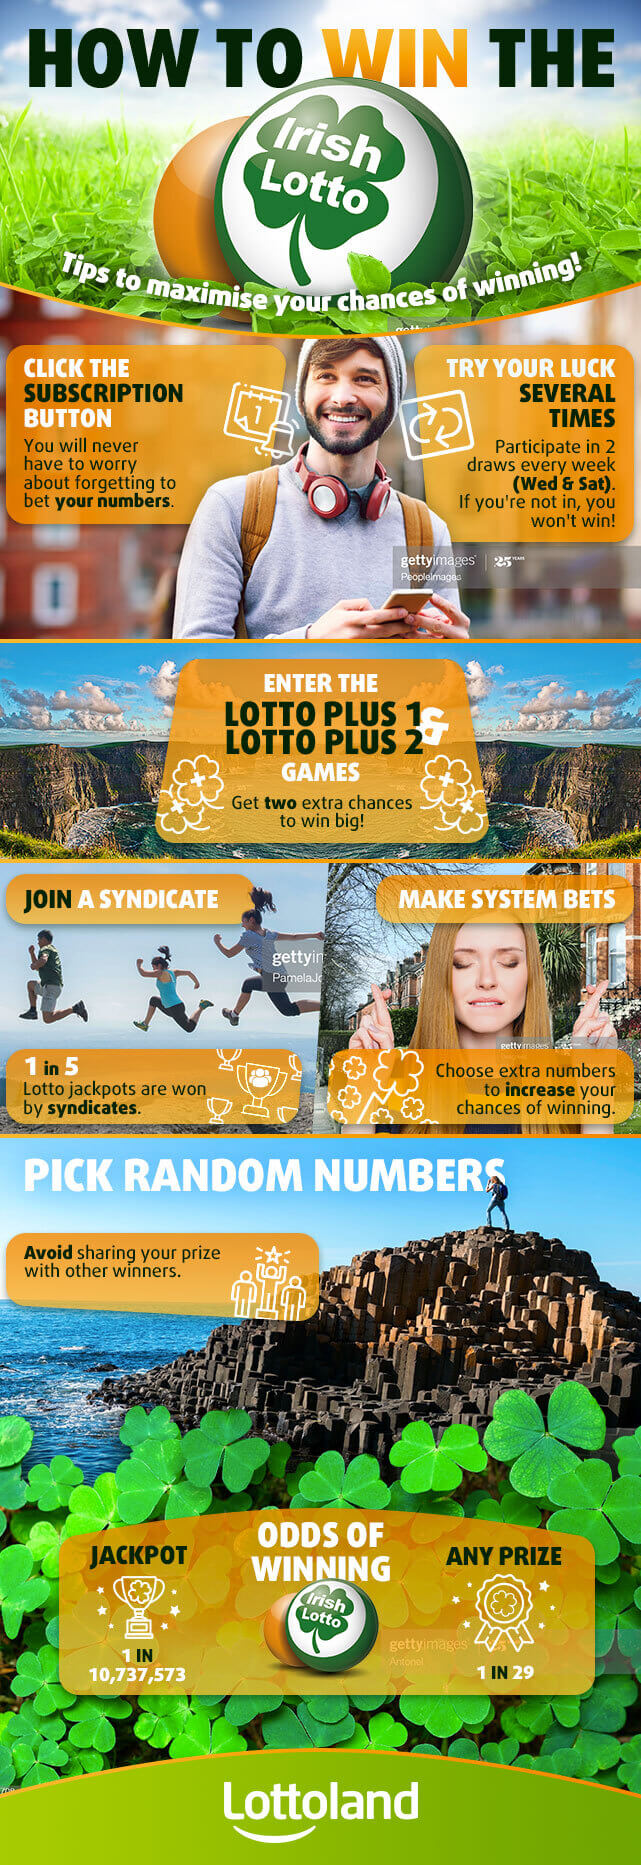 How to win the Irish Lotto